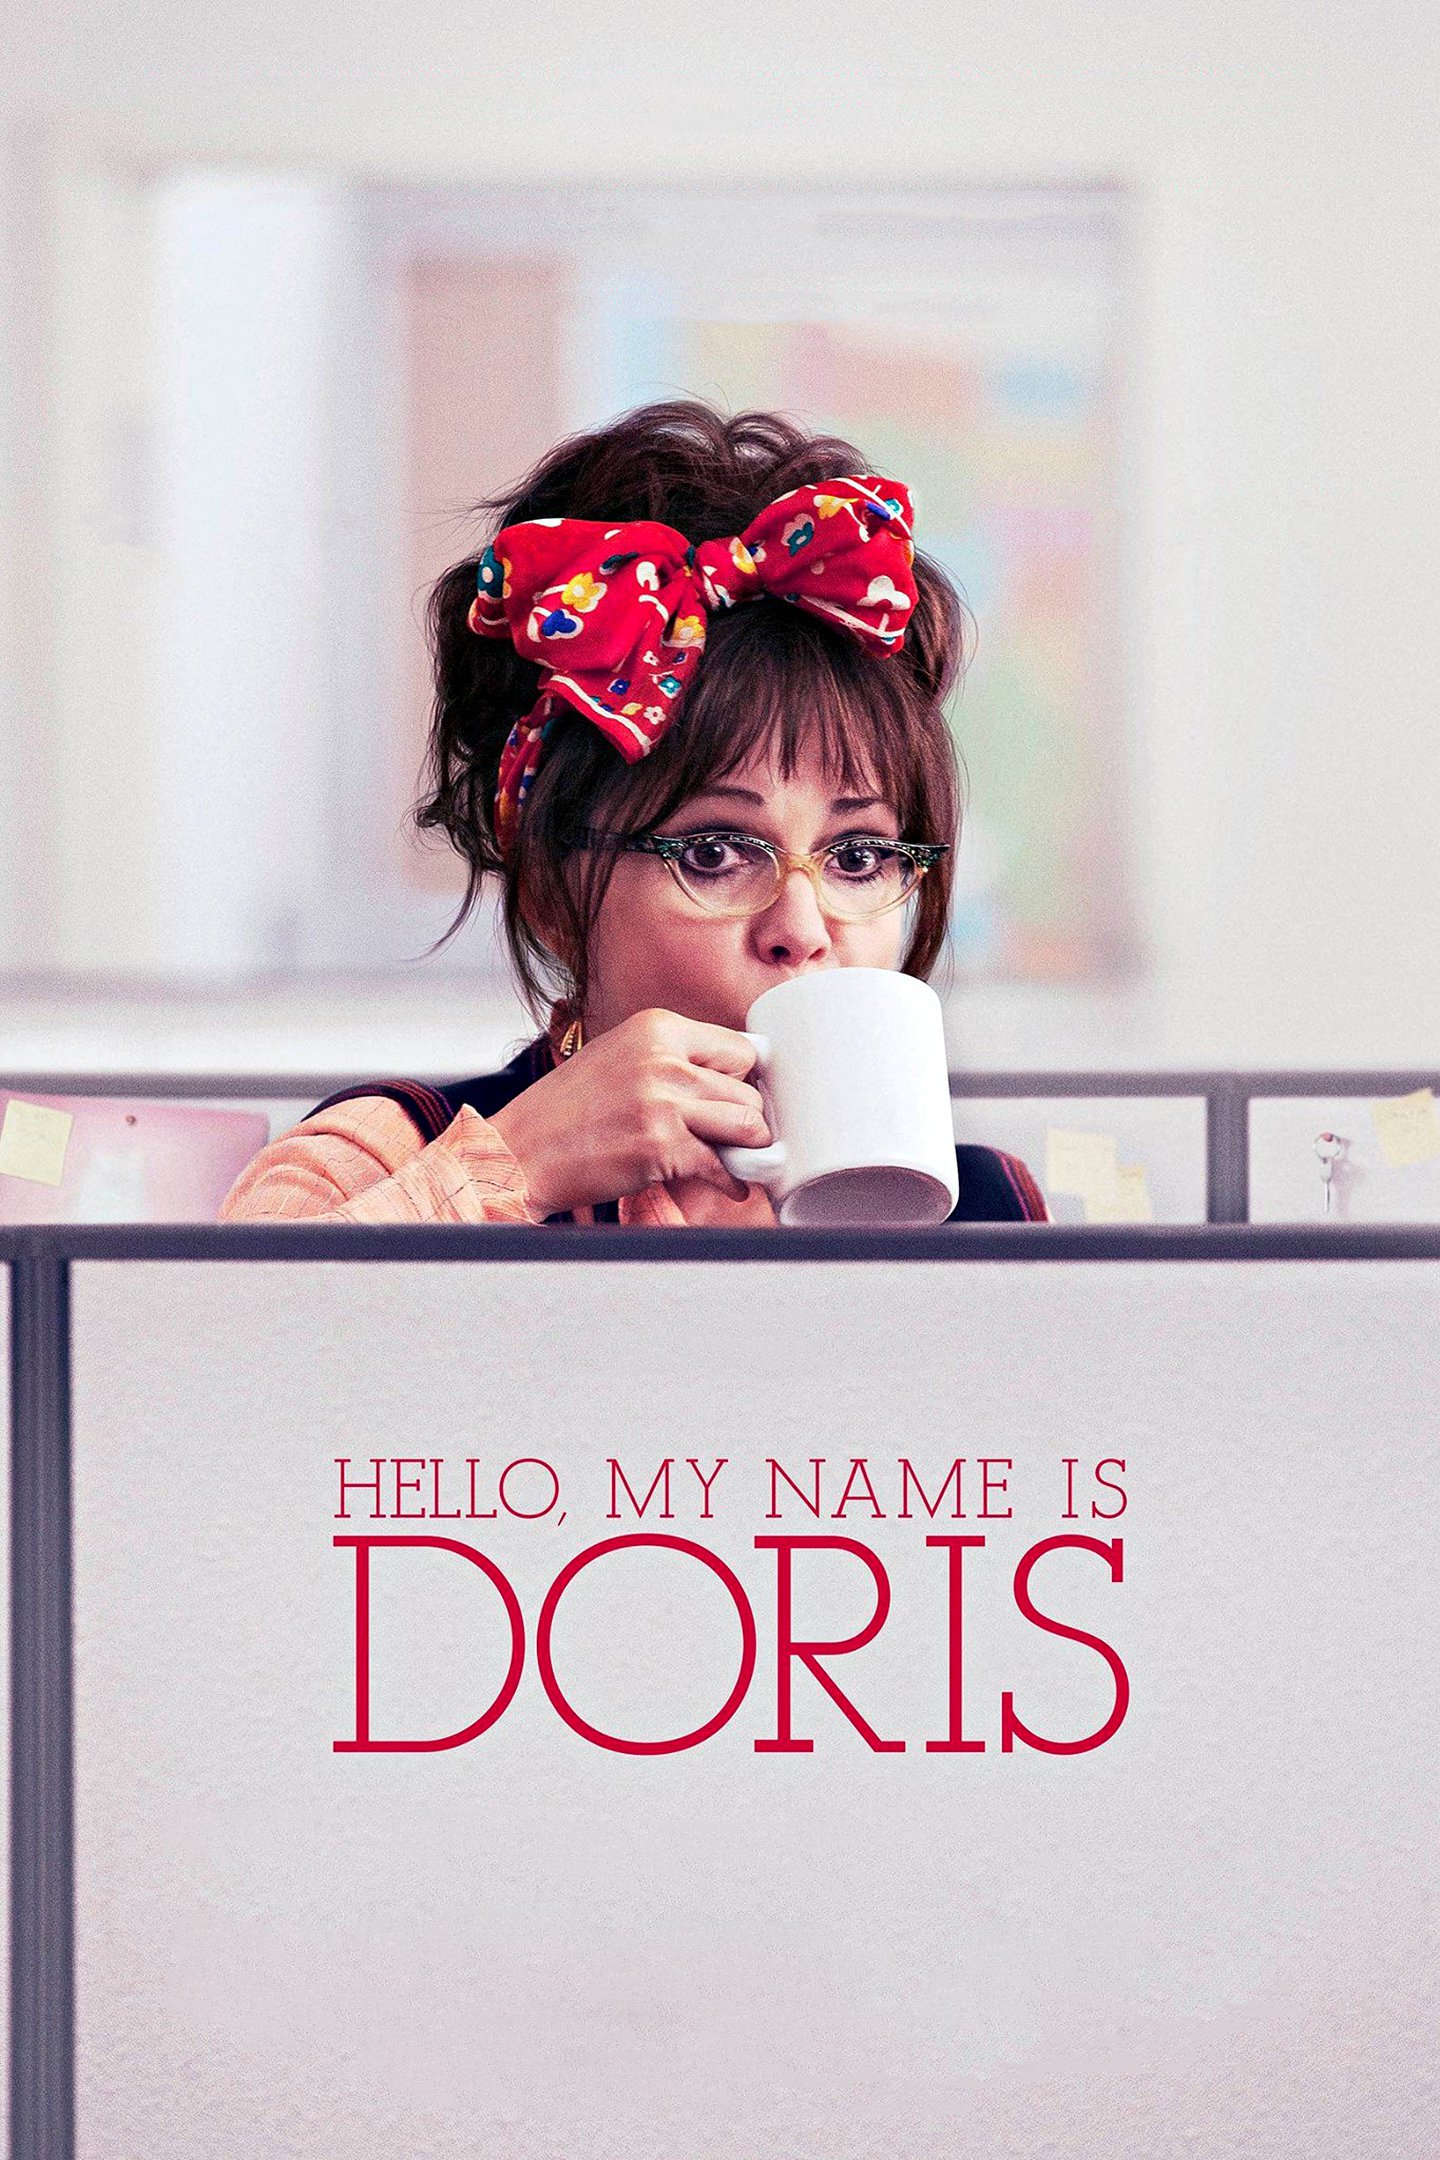 Plakat von "Hello, My Name Is Doris"